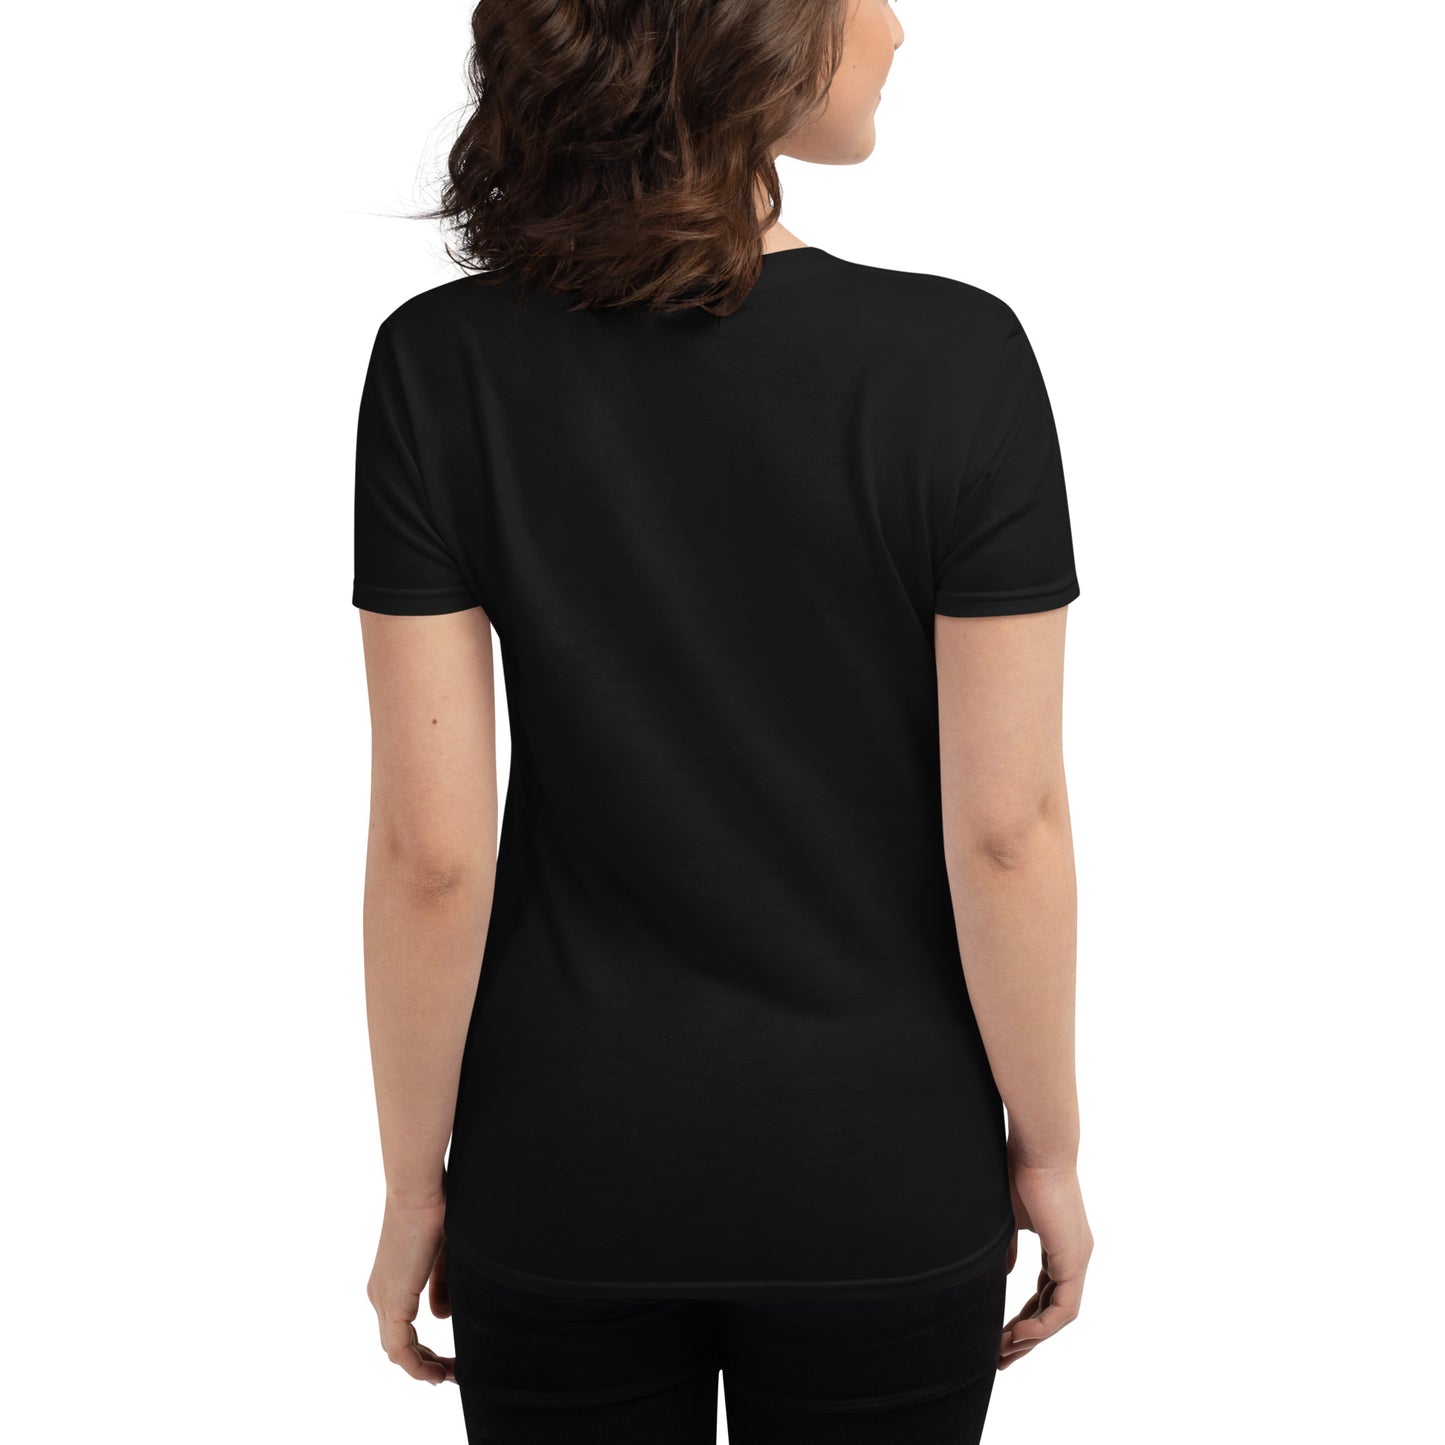 Spring - Women's short sleeve t-shirt ~ Sharon Dawn Collection